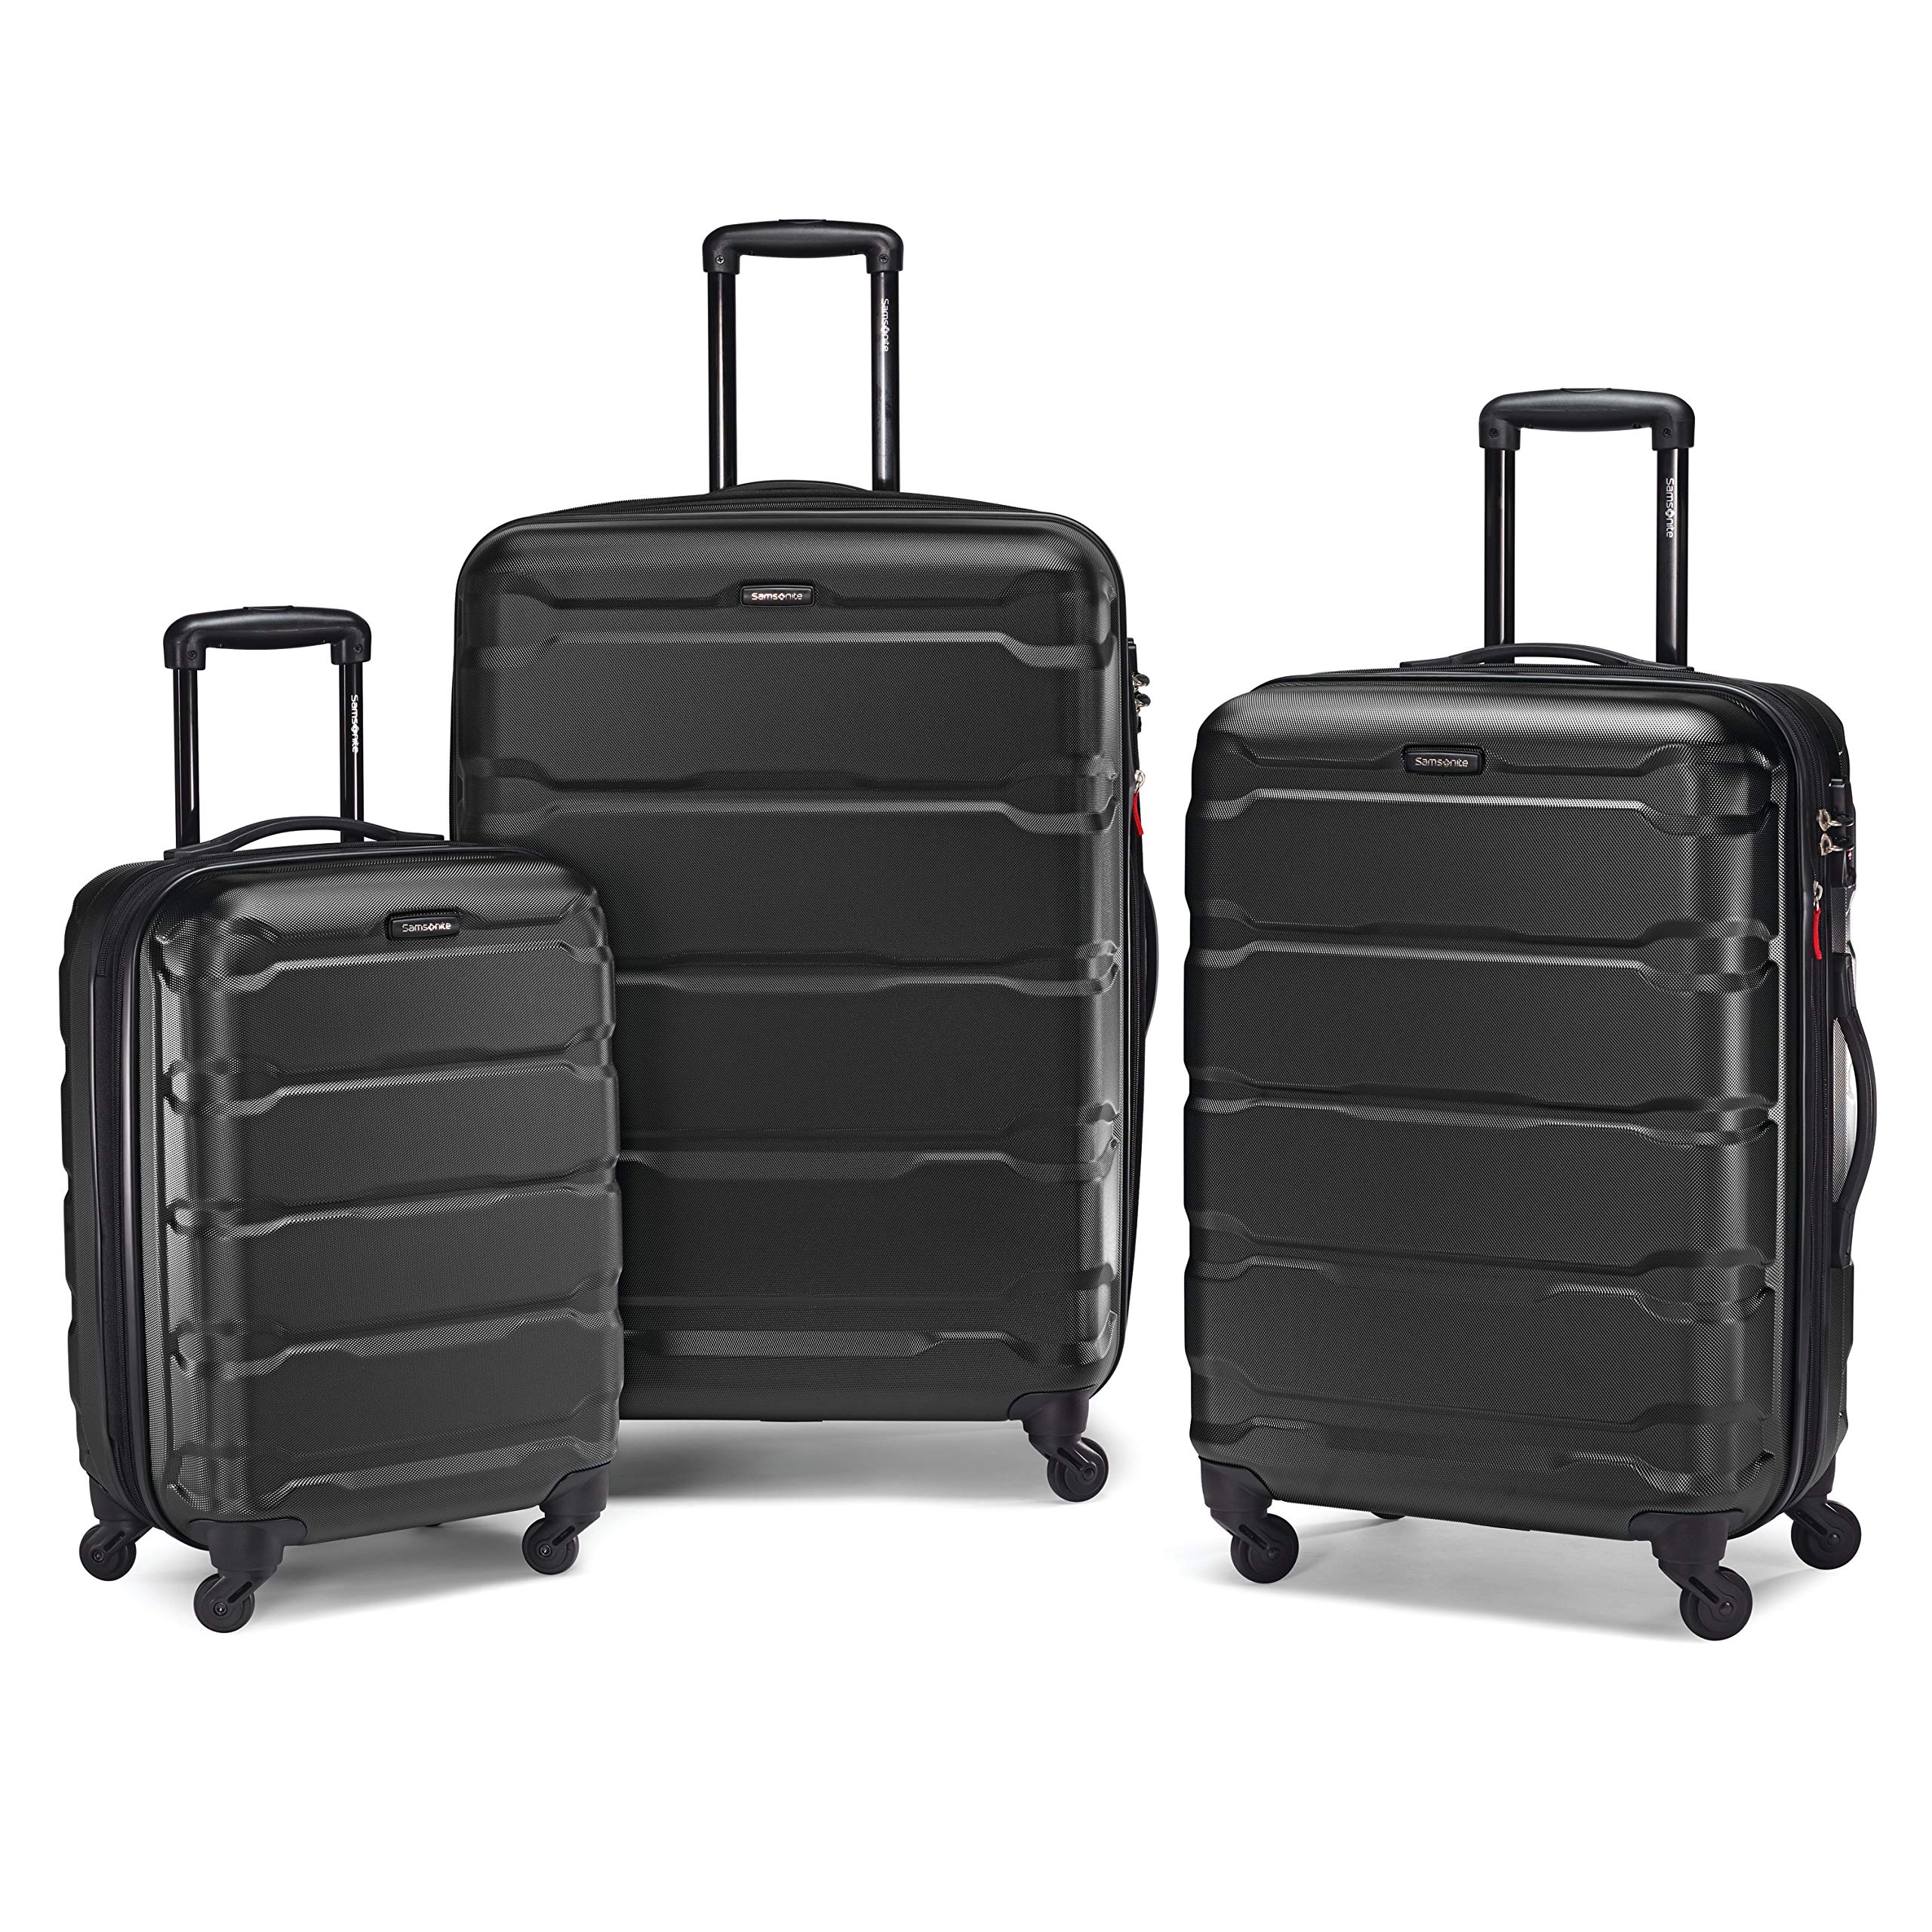 Samsonite Omni Pc Hardside Expandable Luggage with Spinner Wheels U8